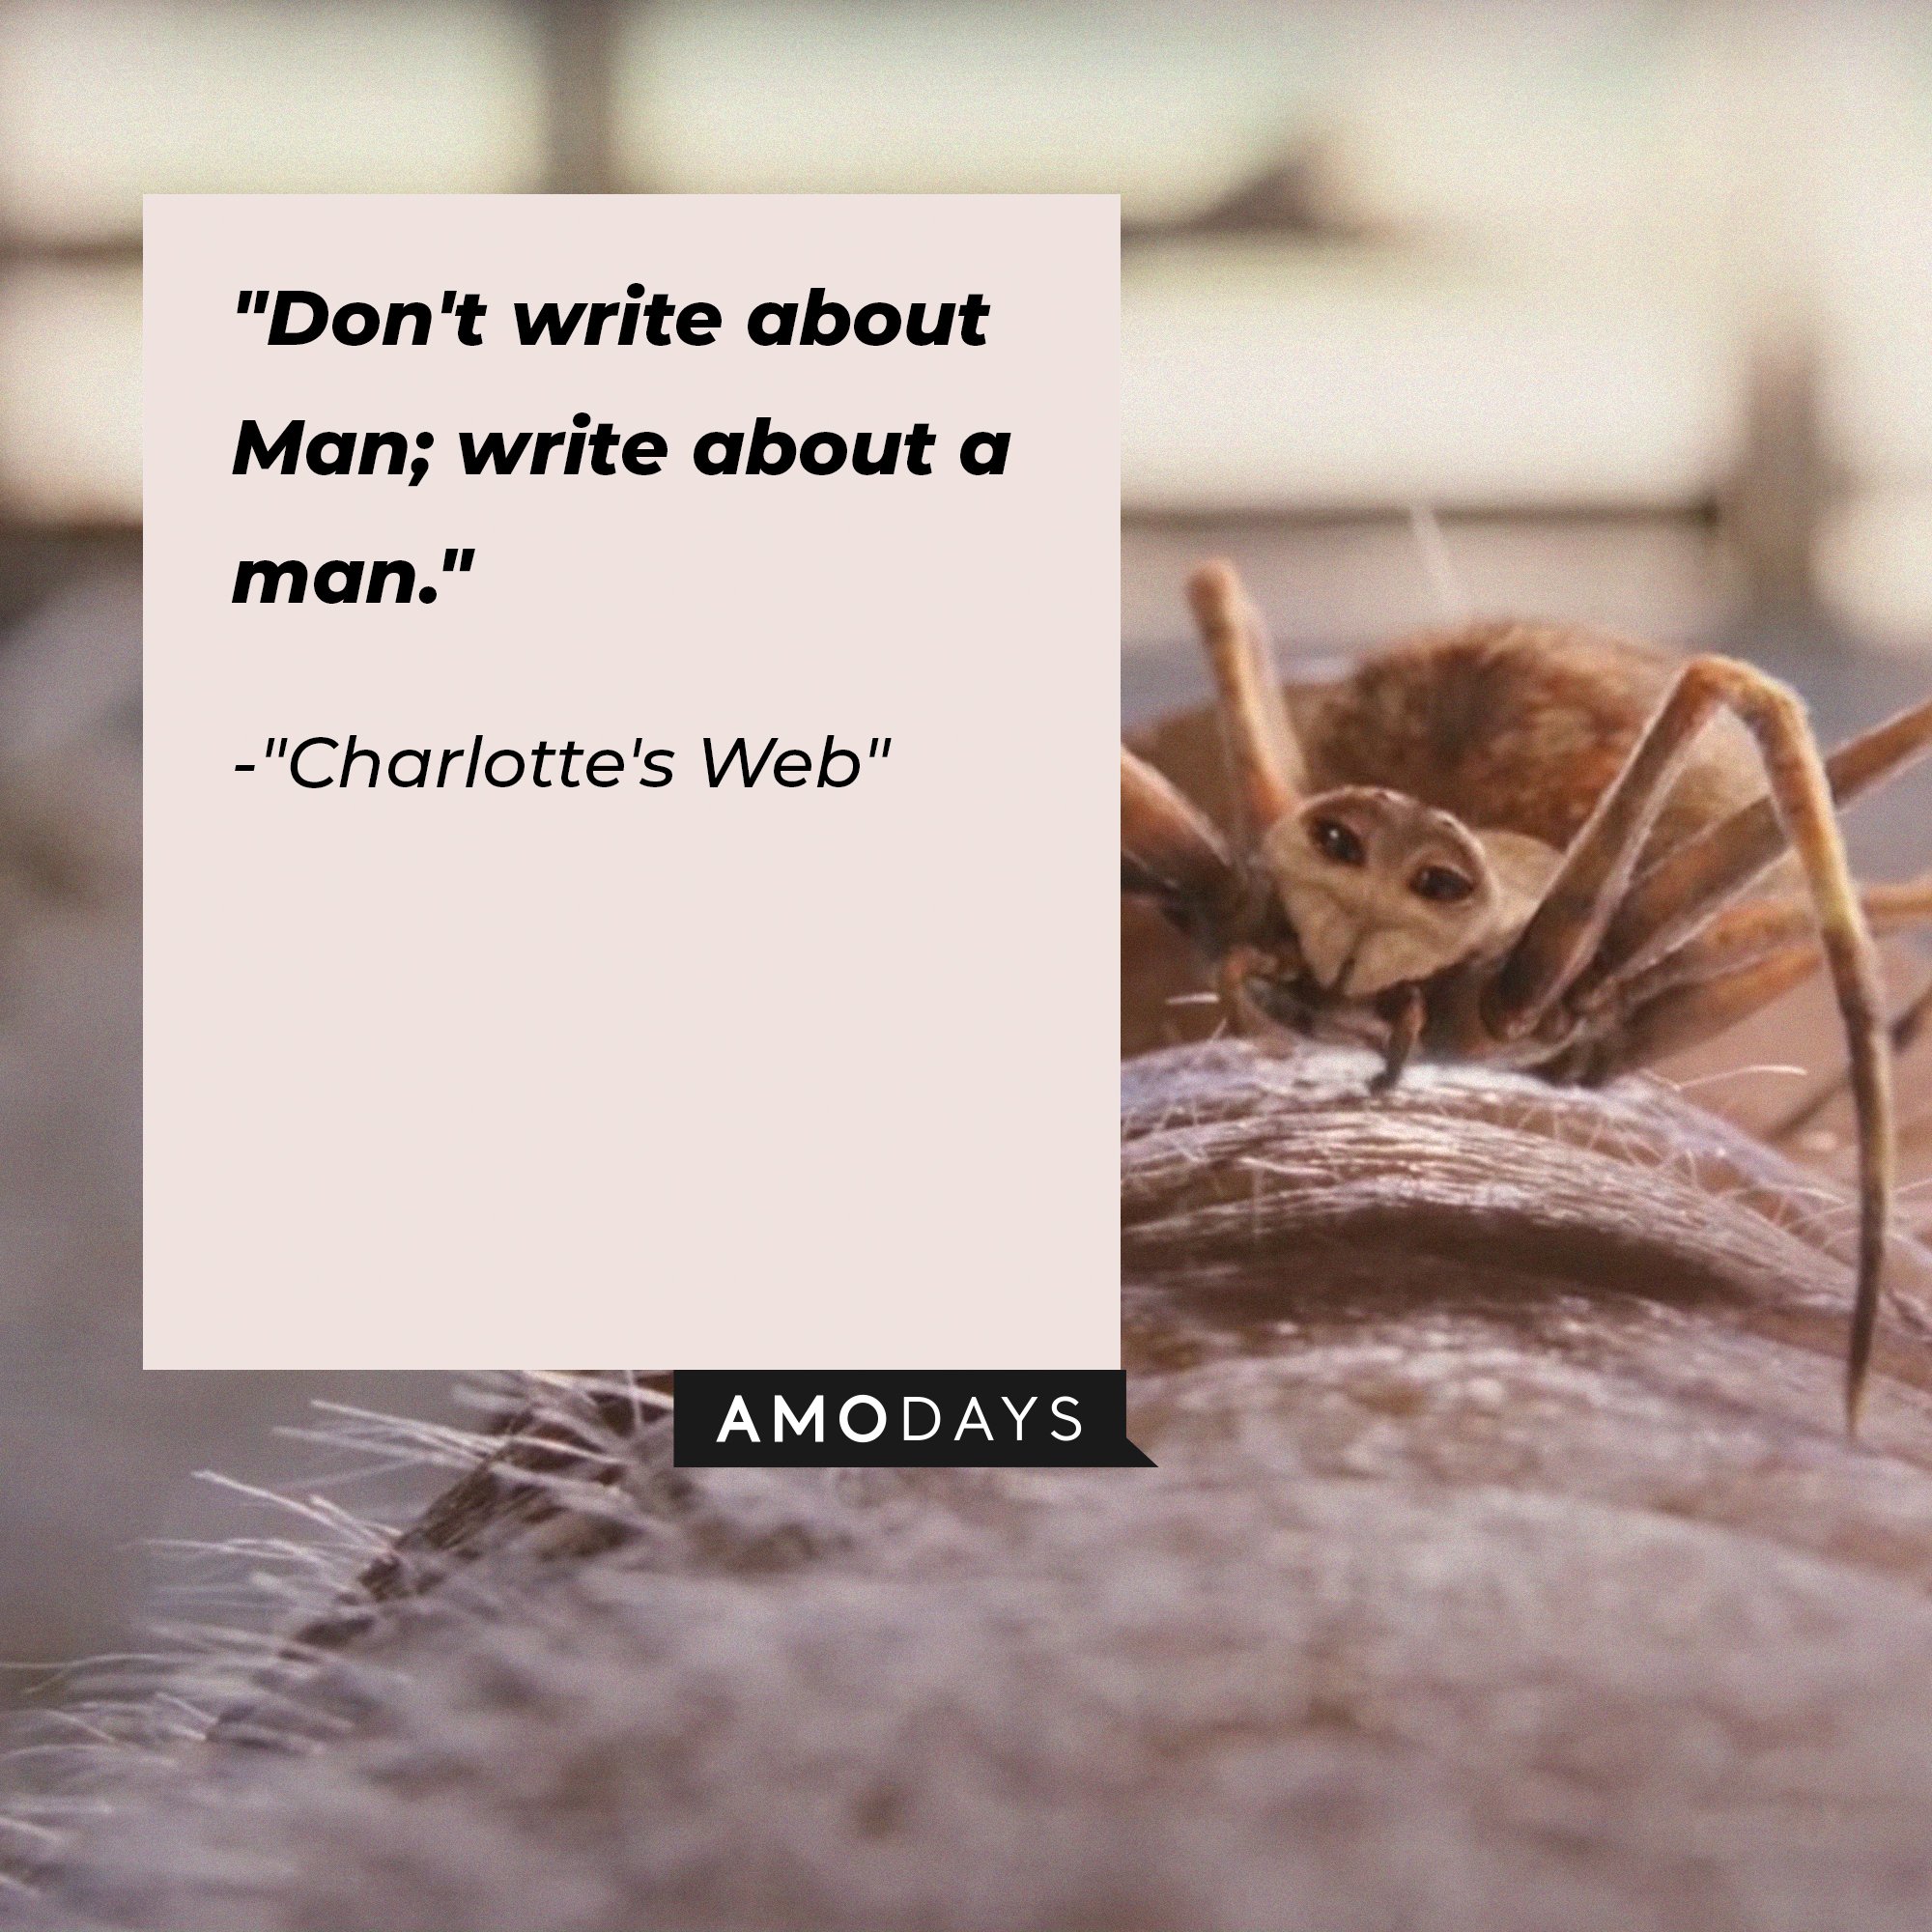 Charlotte's Web quote: "Don't write about Man; write about a man." | Image: AmoDays